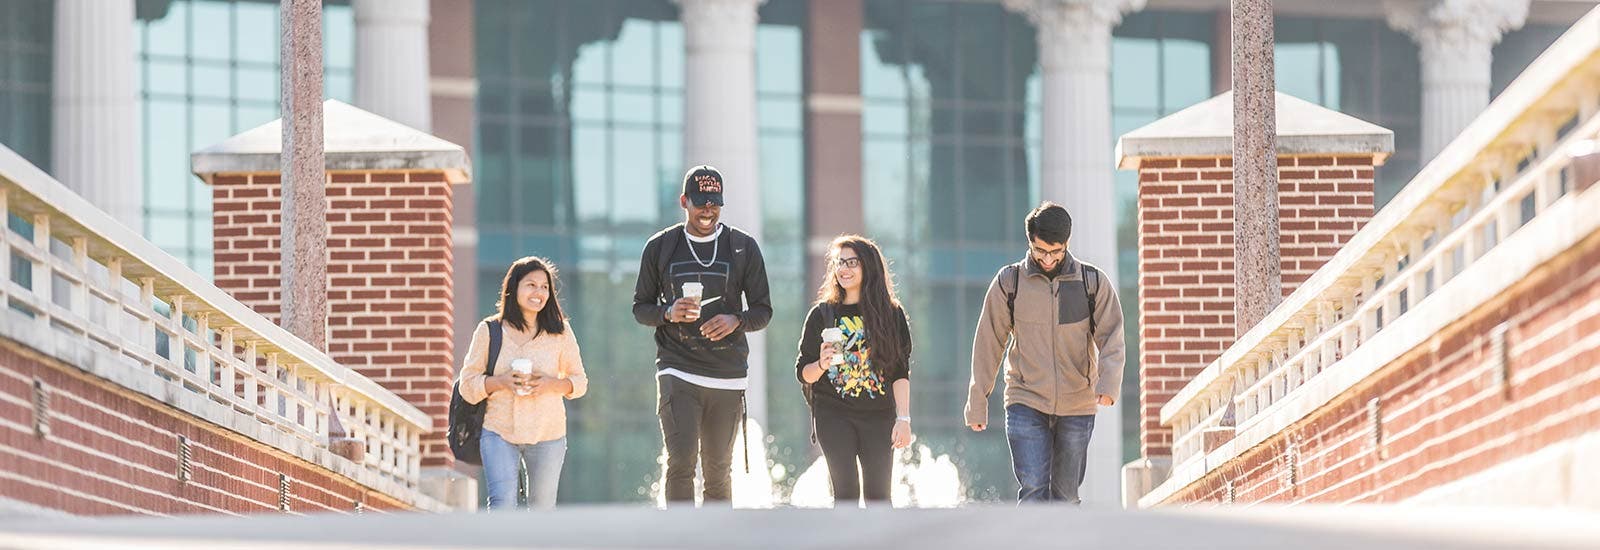 Baylor students walking together on campus